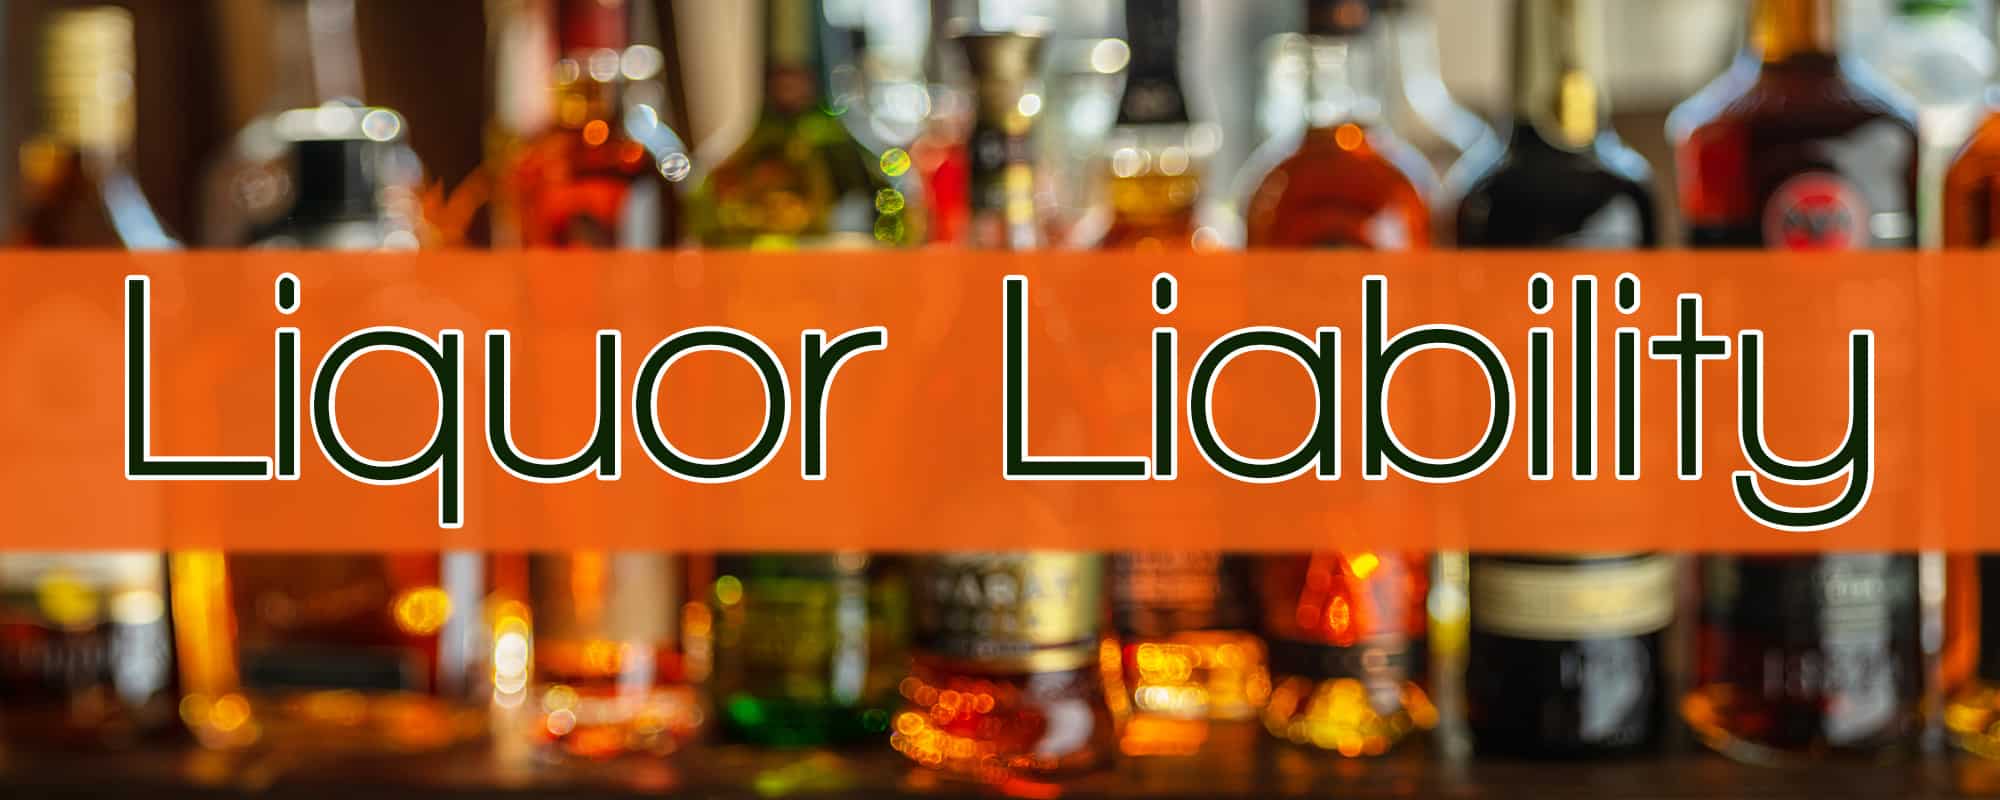 Featured image for “Liquor Liability”